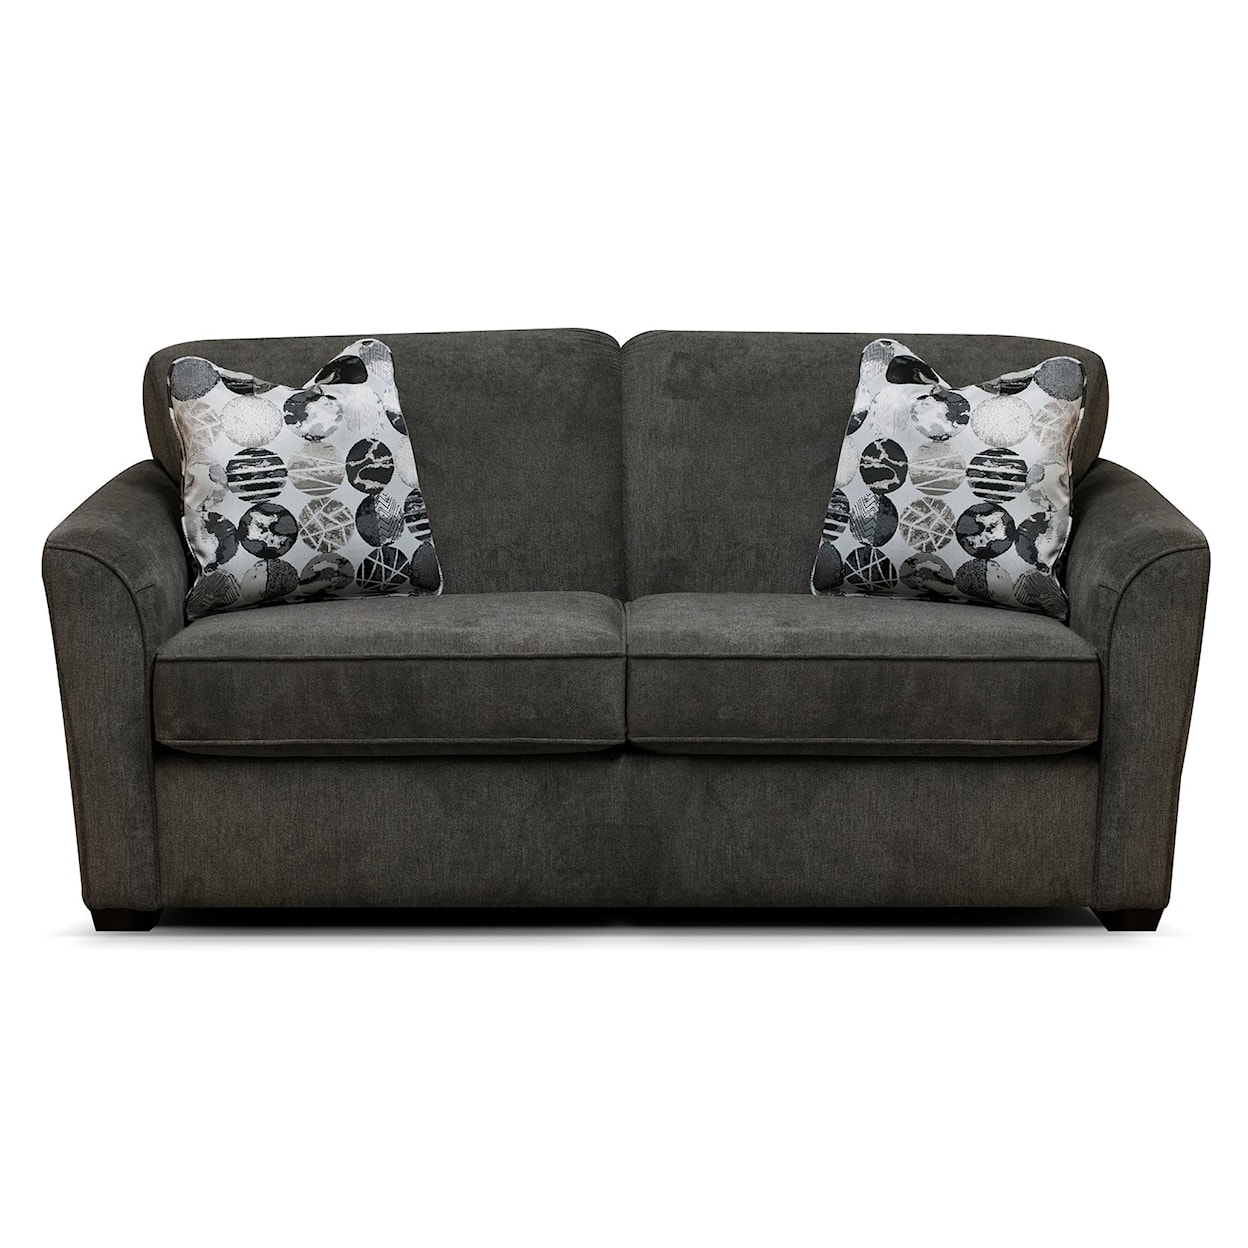 Tennessee Custom Upholstery 300 Series Full Size Sleeper Sofa